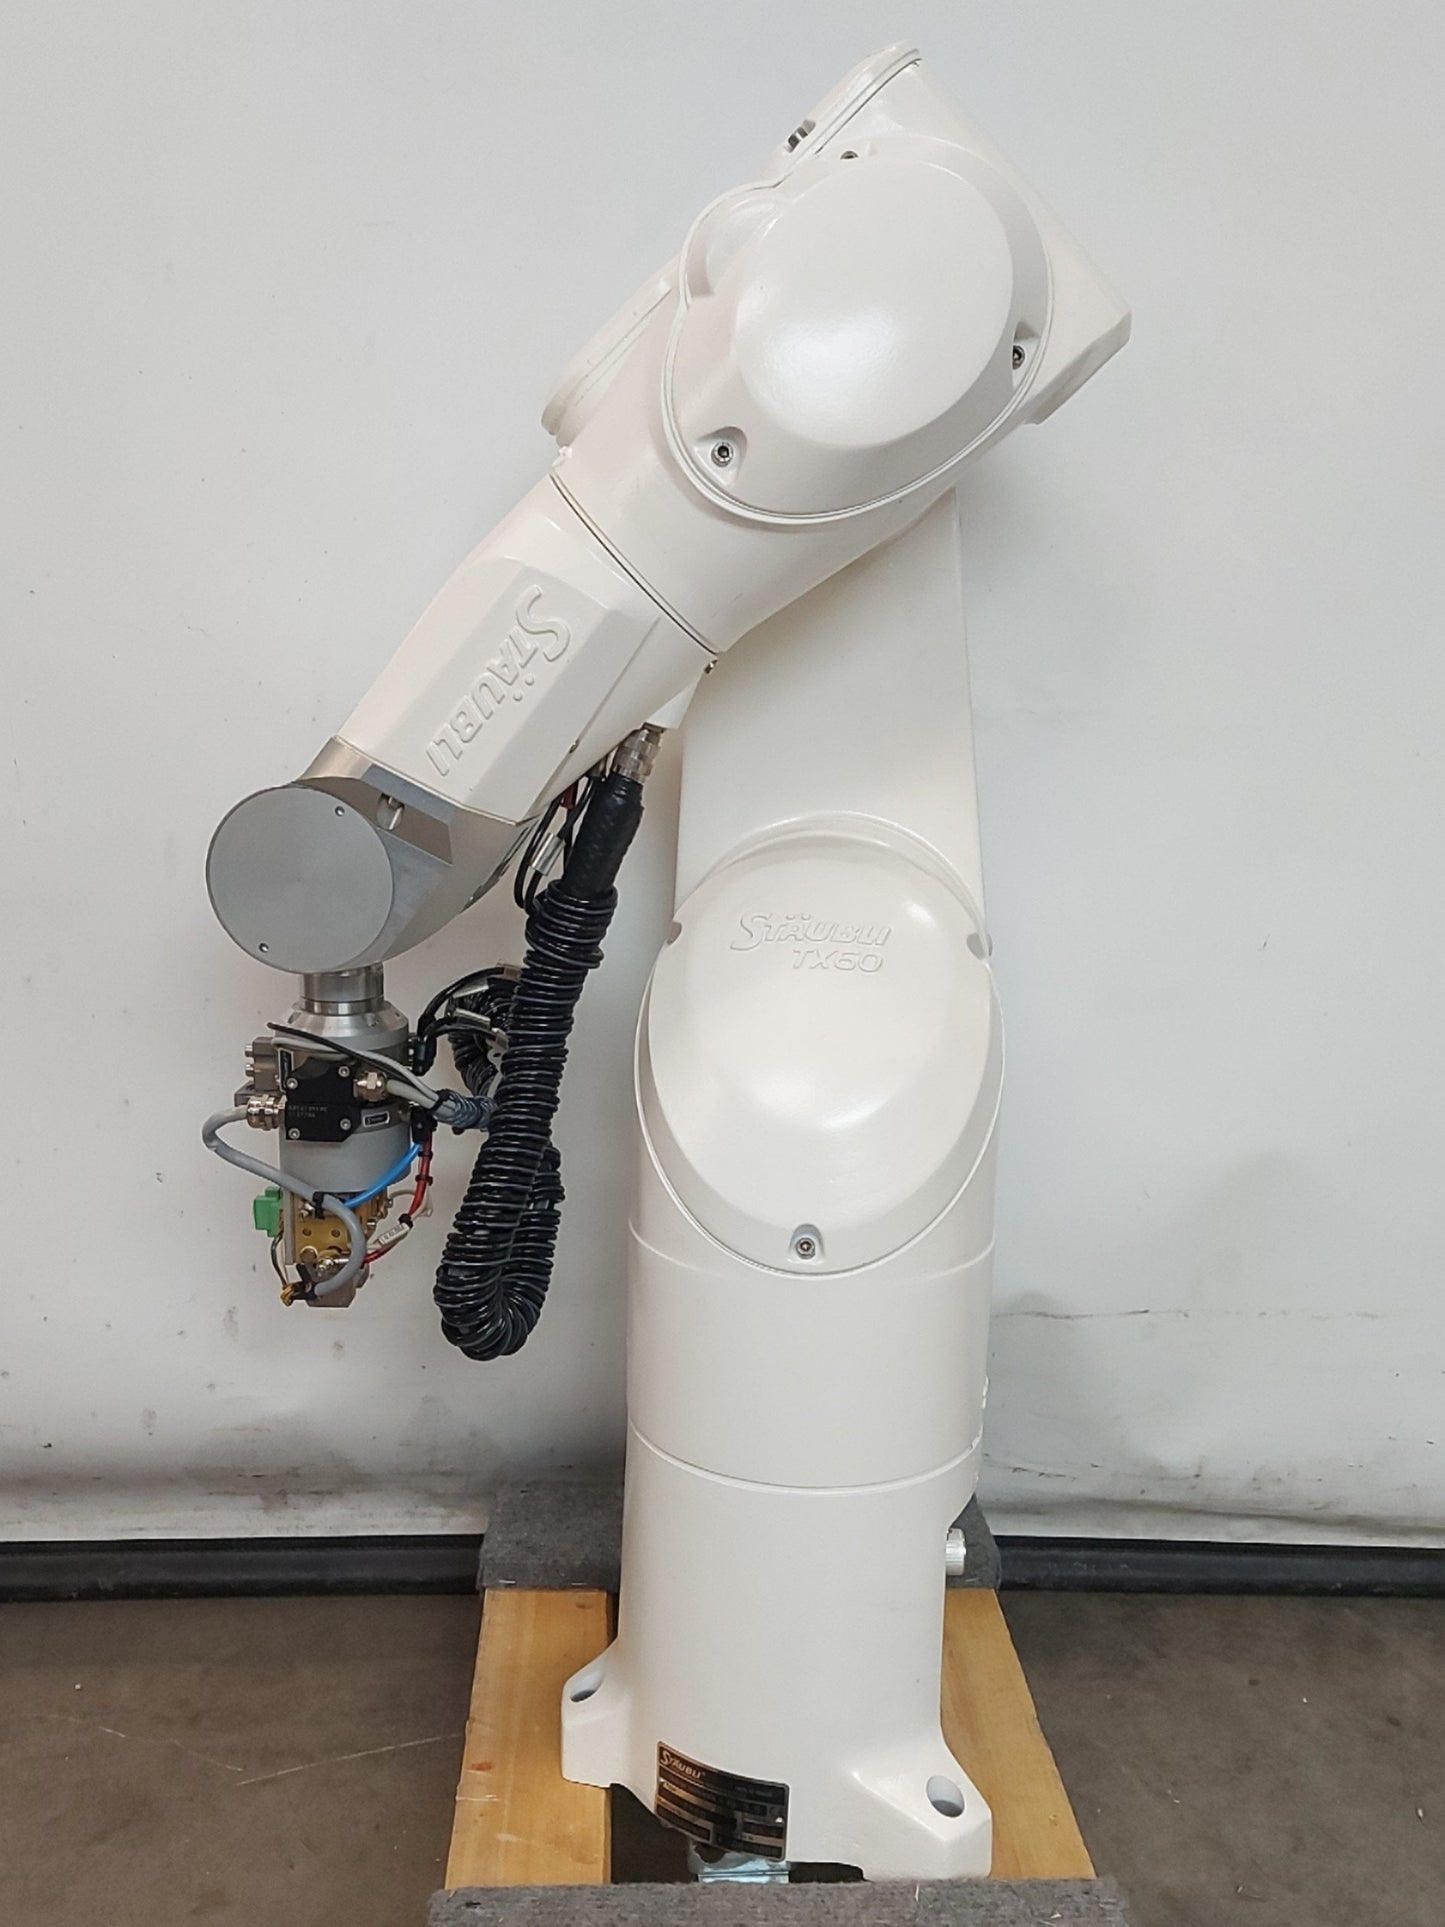 Used Staubli TX60 6-Axis Robot Manipulator Arm, 4.5kg Load, 670mm Reach, 8m/s Speed